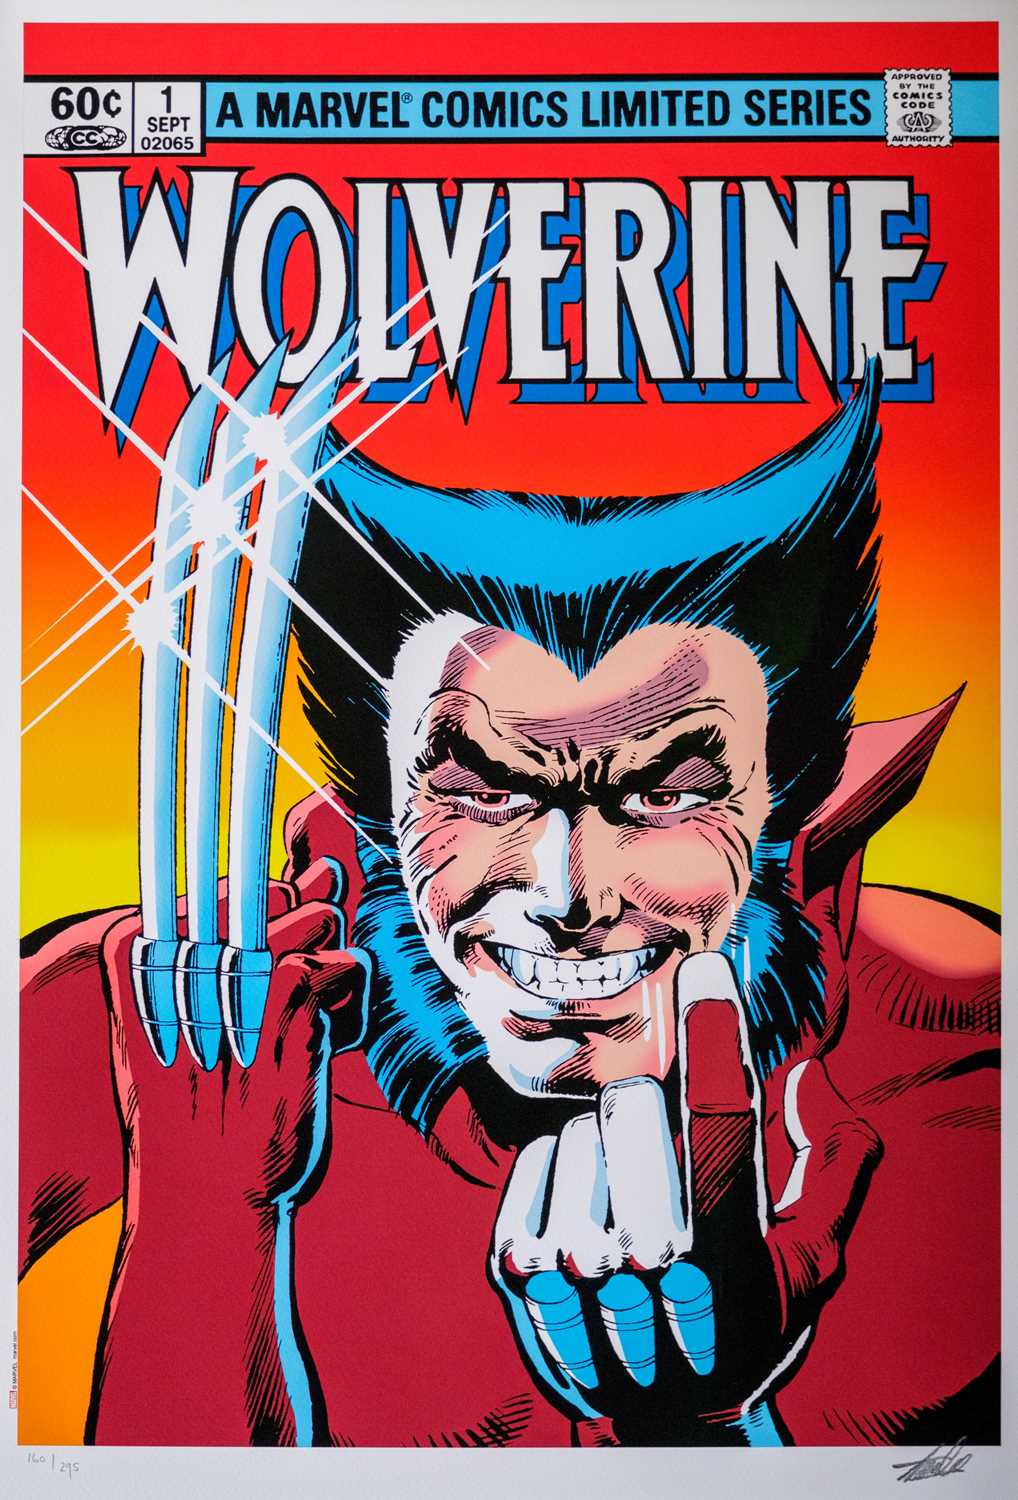 (Signed) Stan LEE (1922-2018) Wolverine #1 (2016)